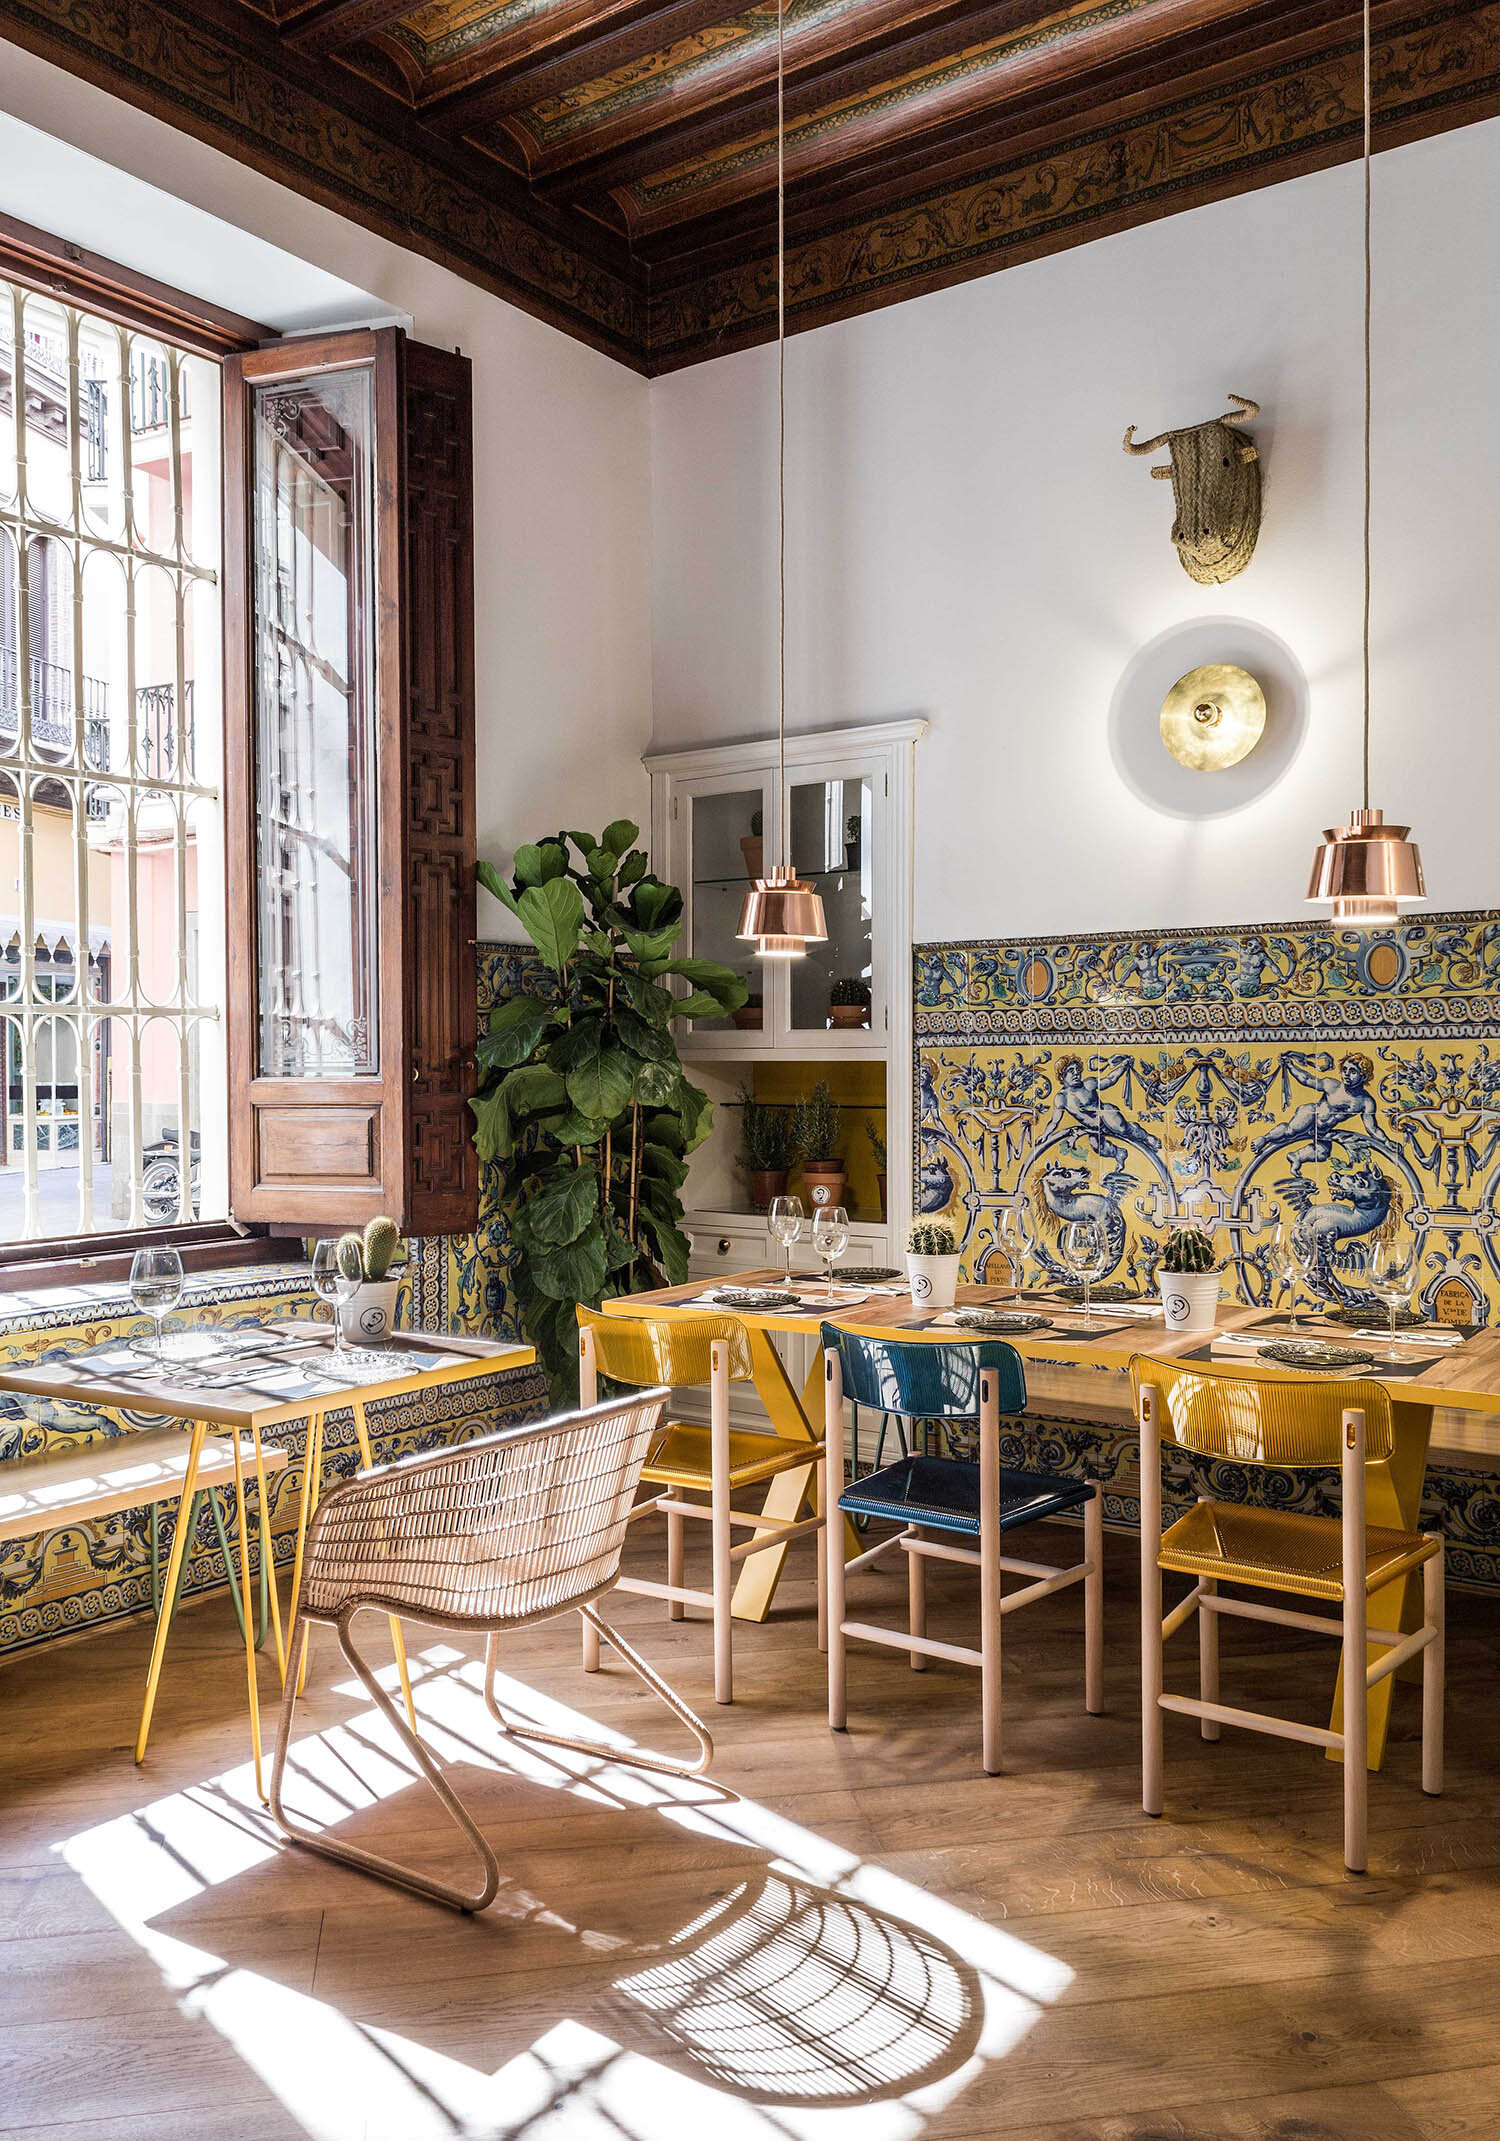 Foodie's Guide To Seville: El Pinton, Restaurant in Seville Spain